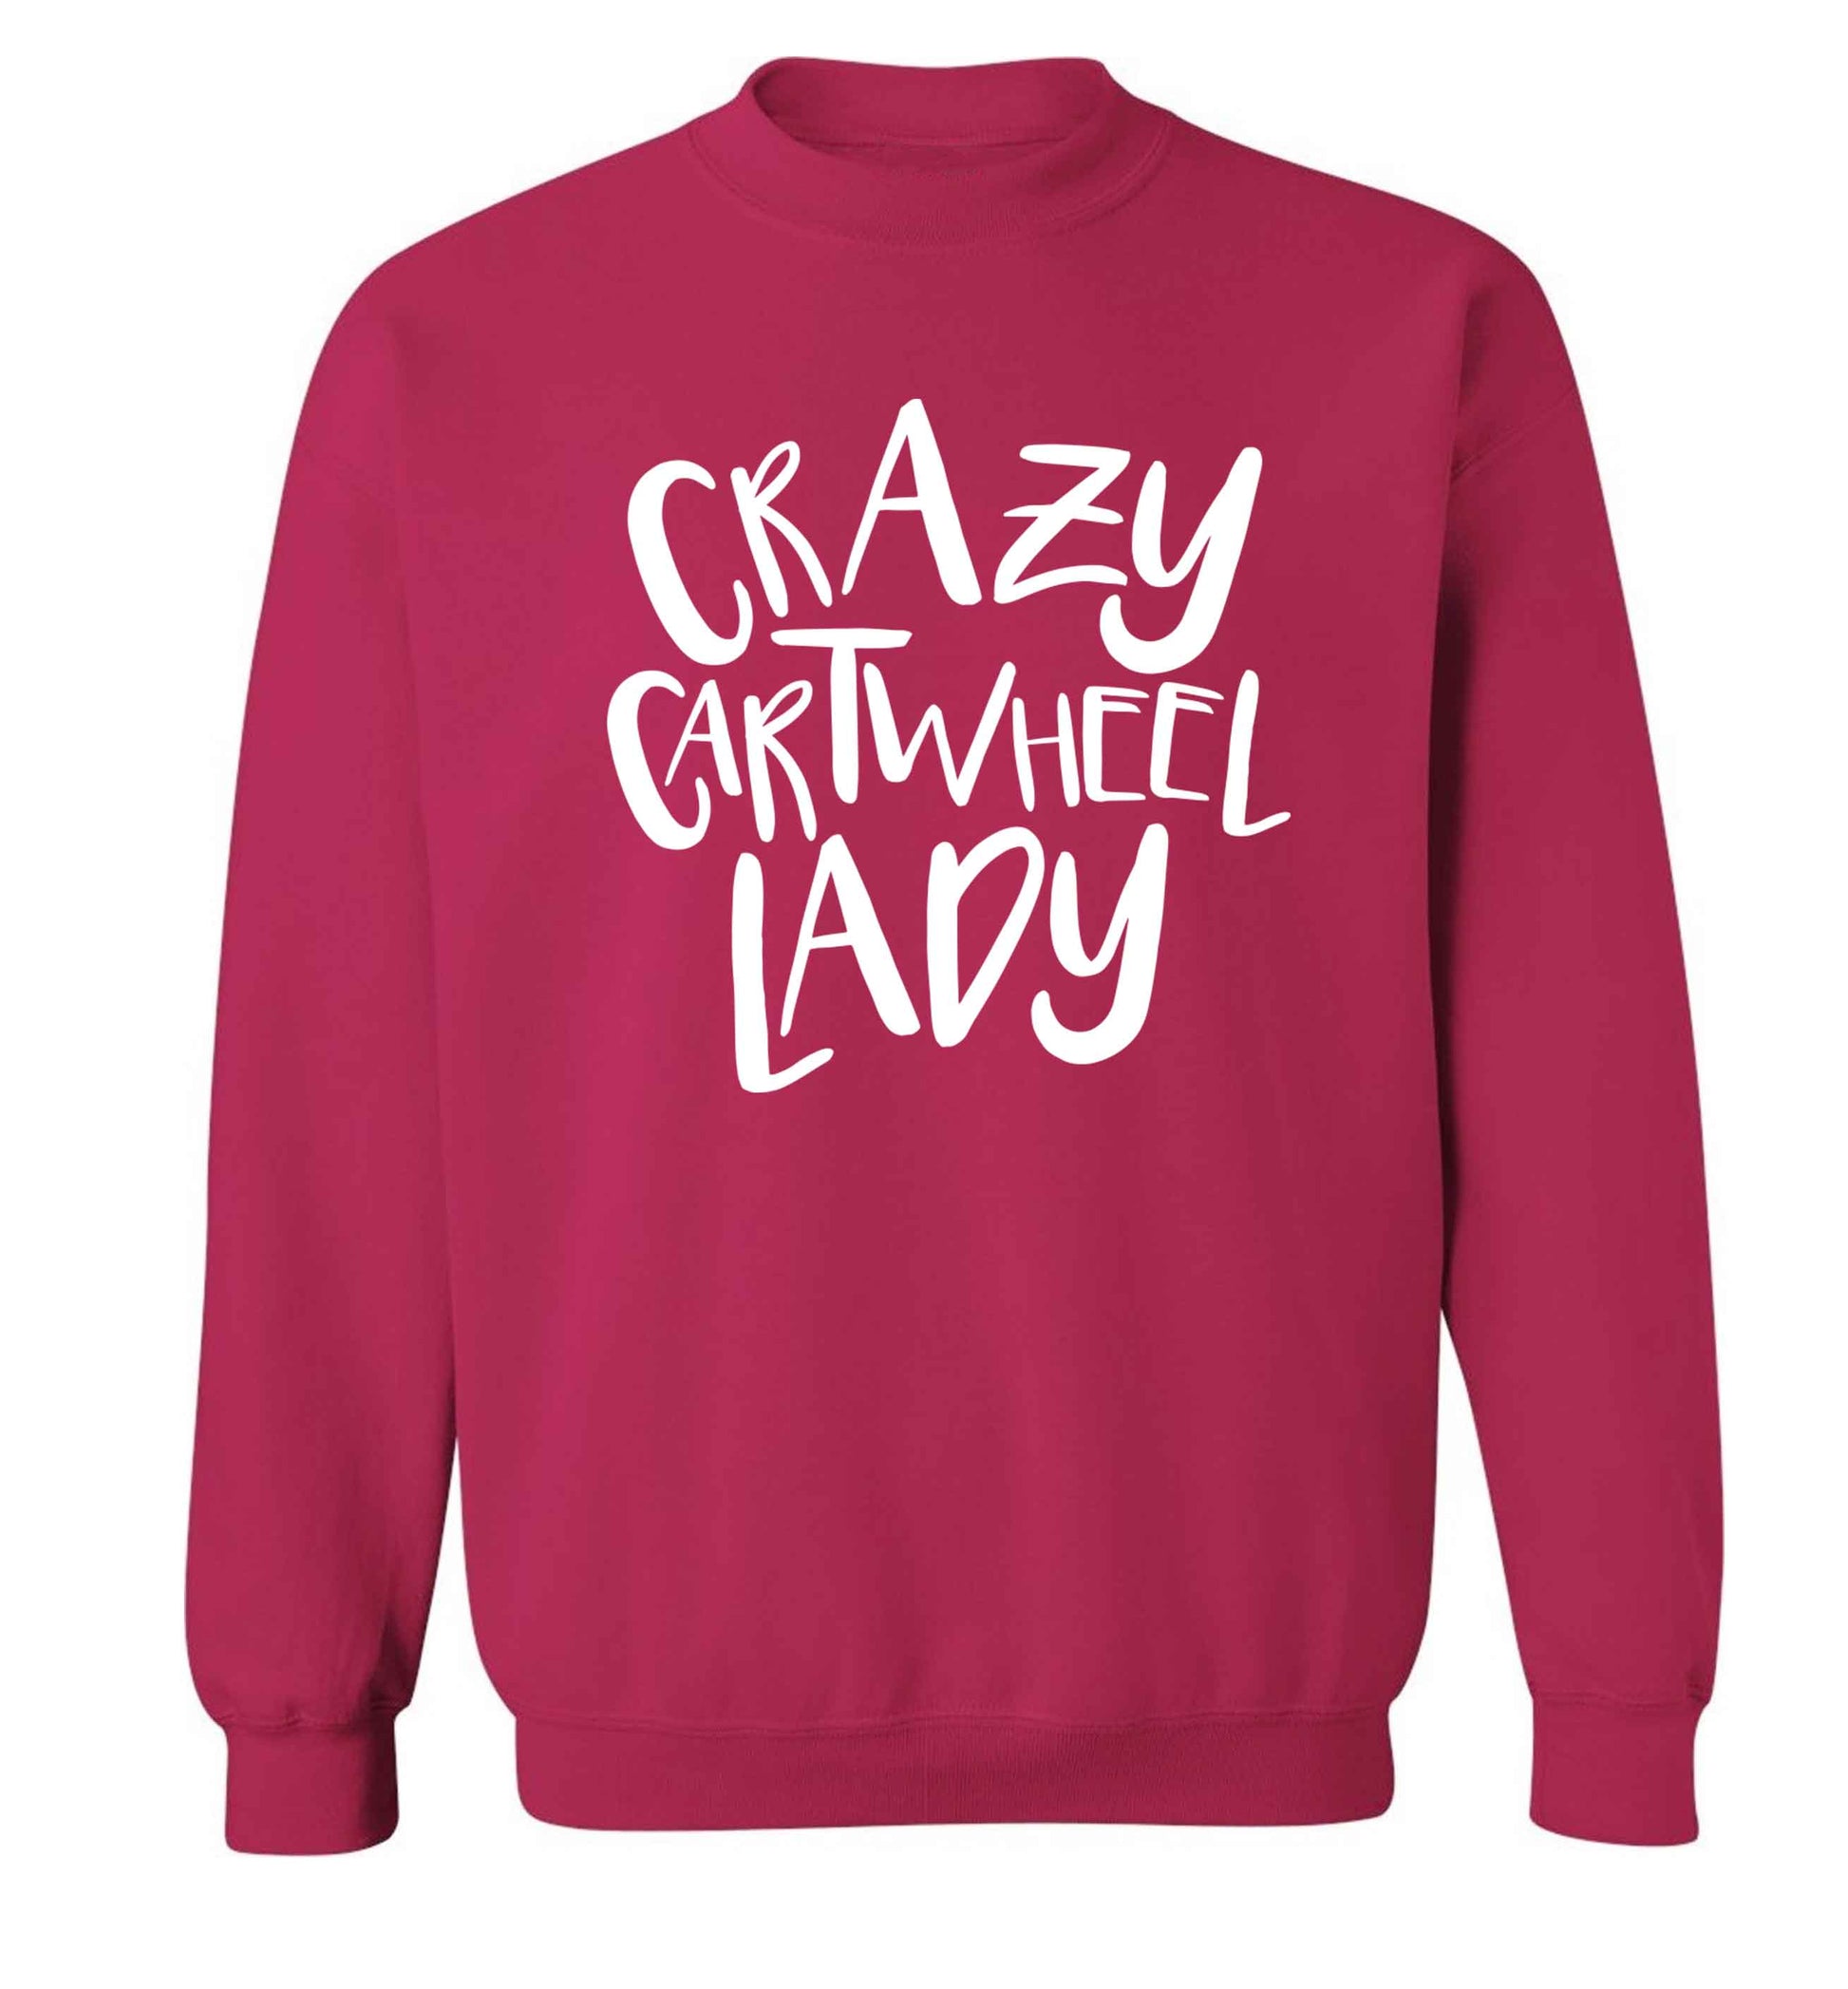 Crazy cartwheel lady Adult's unisex pink Sweater 2XL